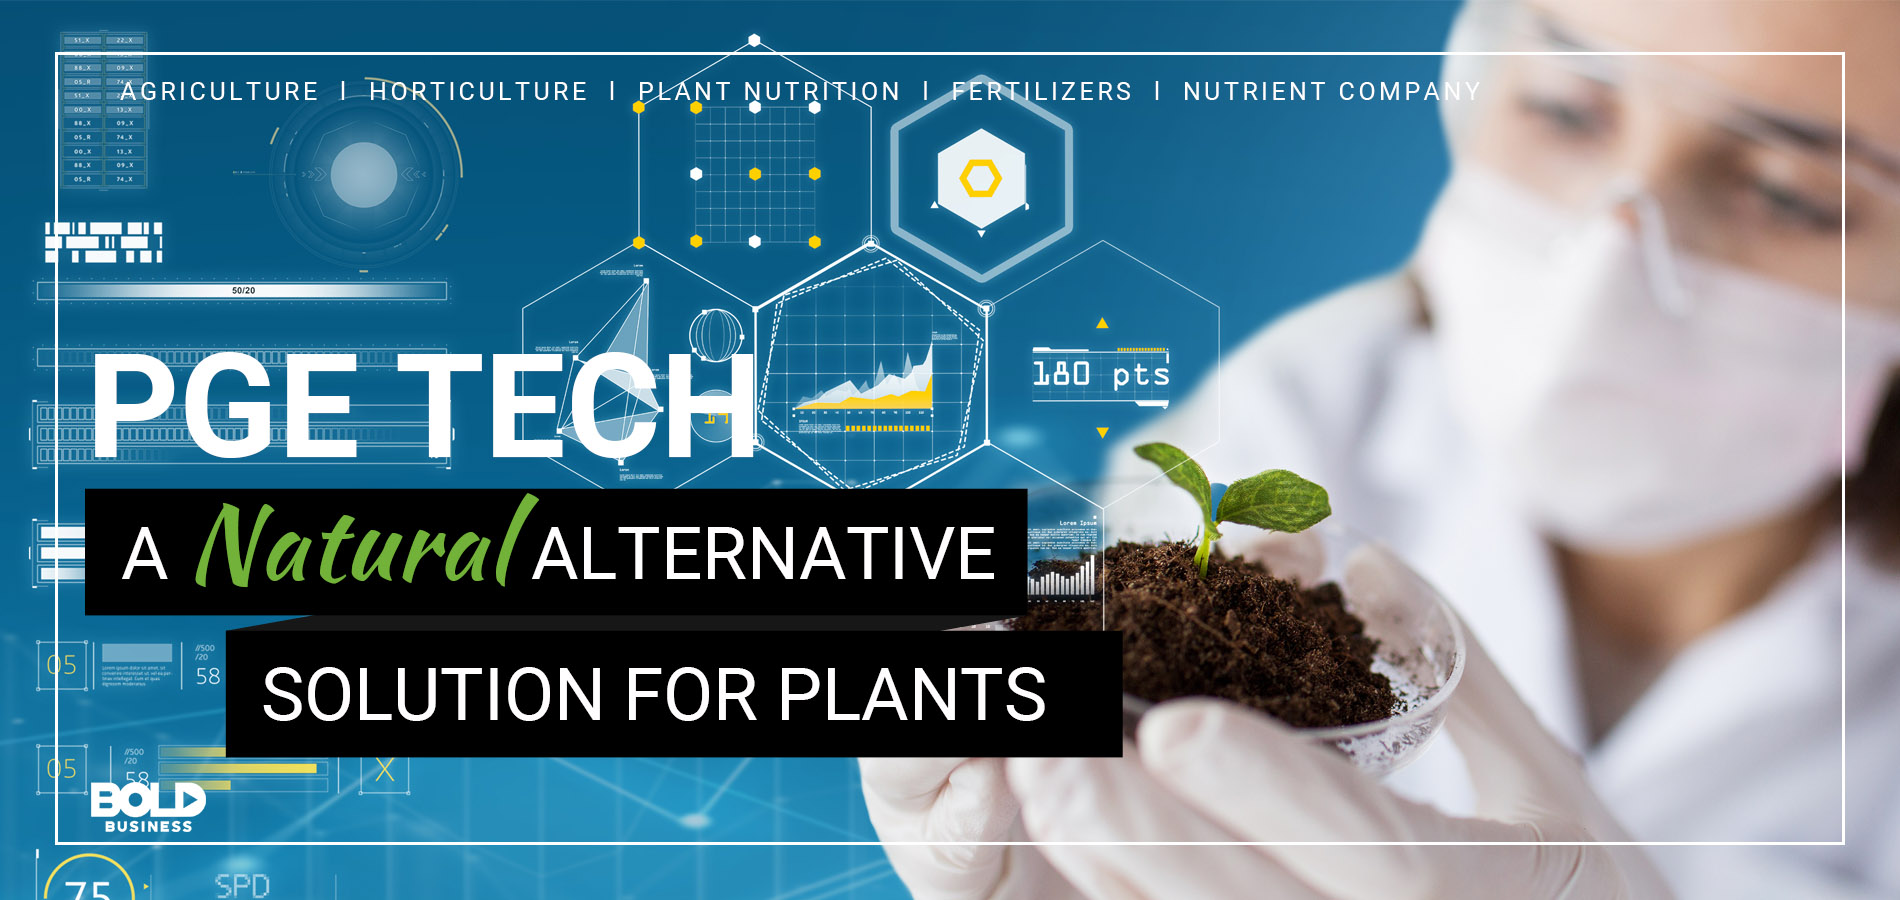 Nutrition Manufacturer PGE Tech is Providing an Innovative Green Alternative to Fertilizers